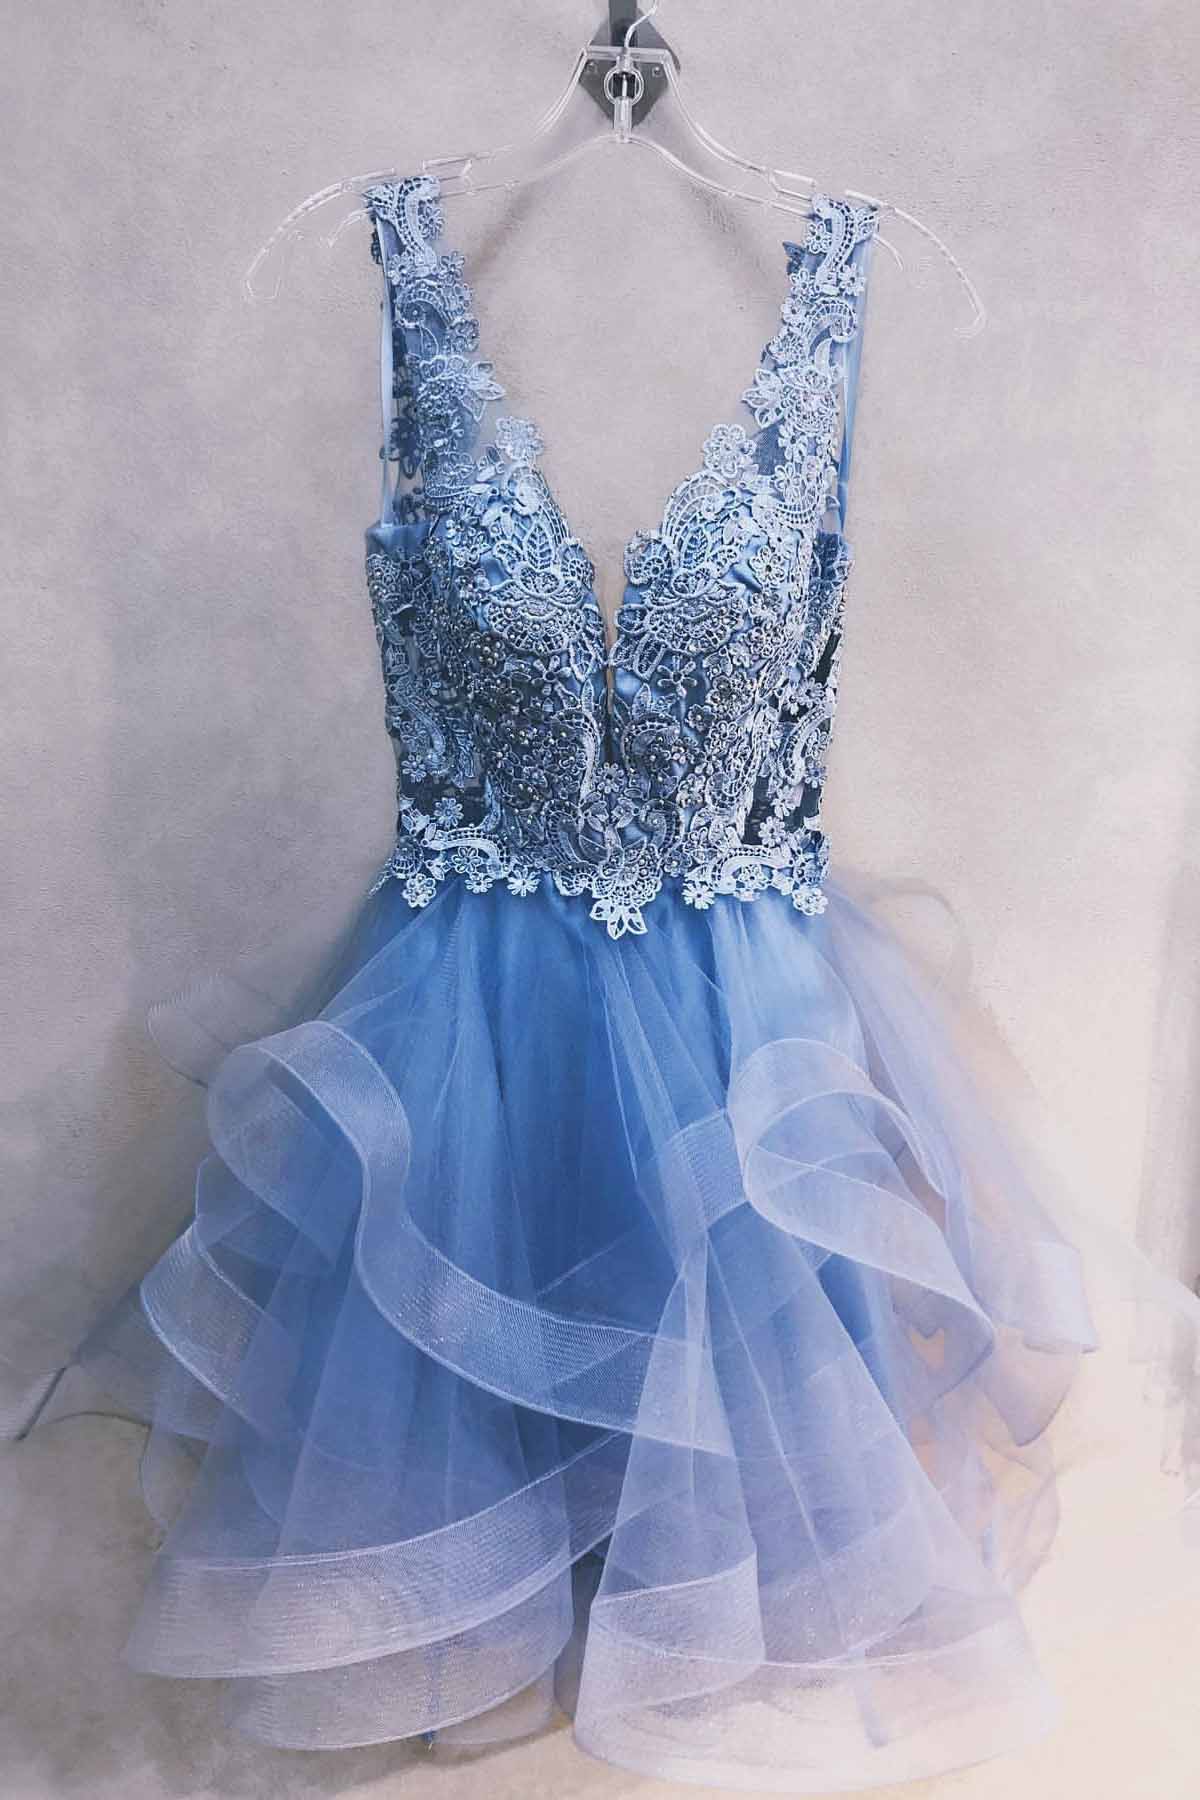 Lace Short Blue Prom Dress Homecoming Graduation Dress OM215